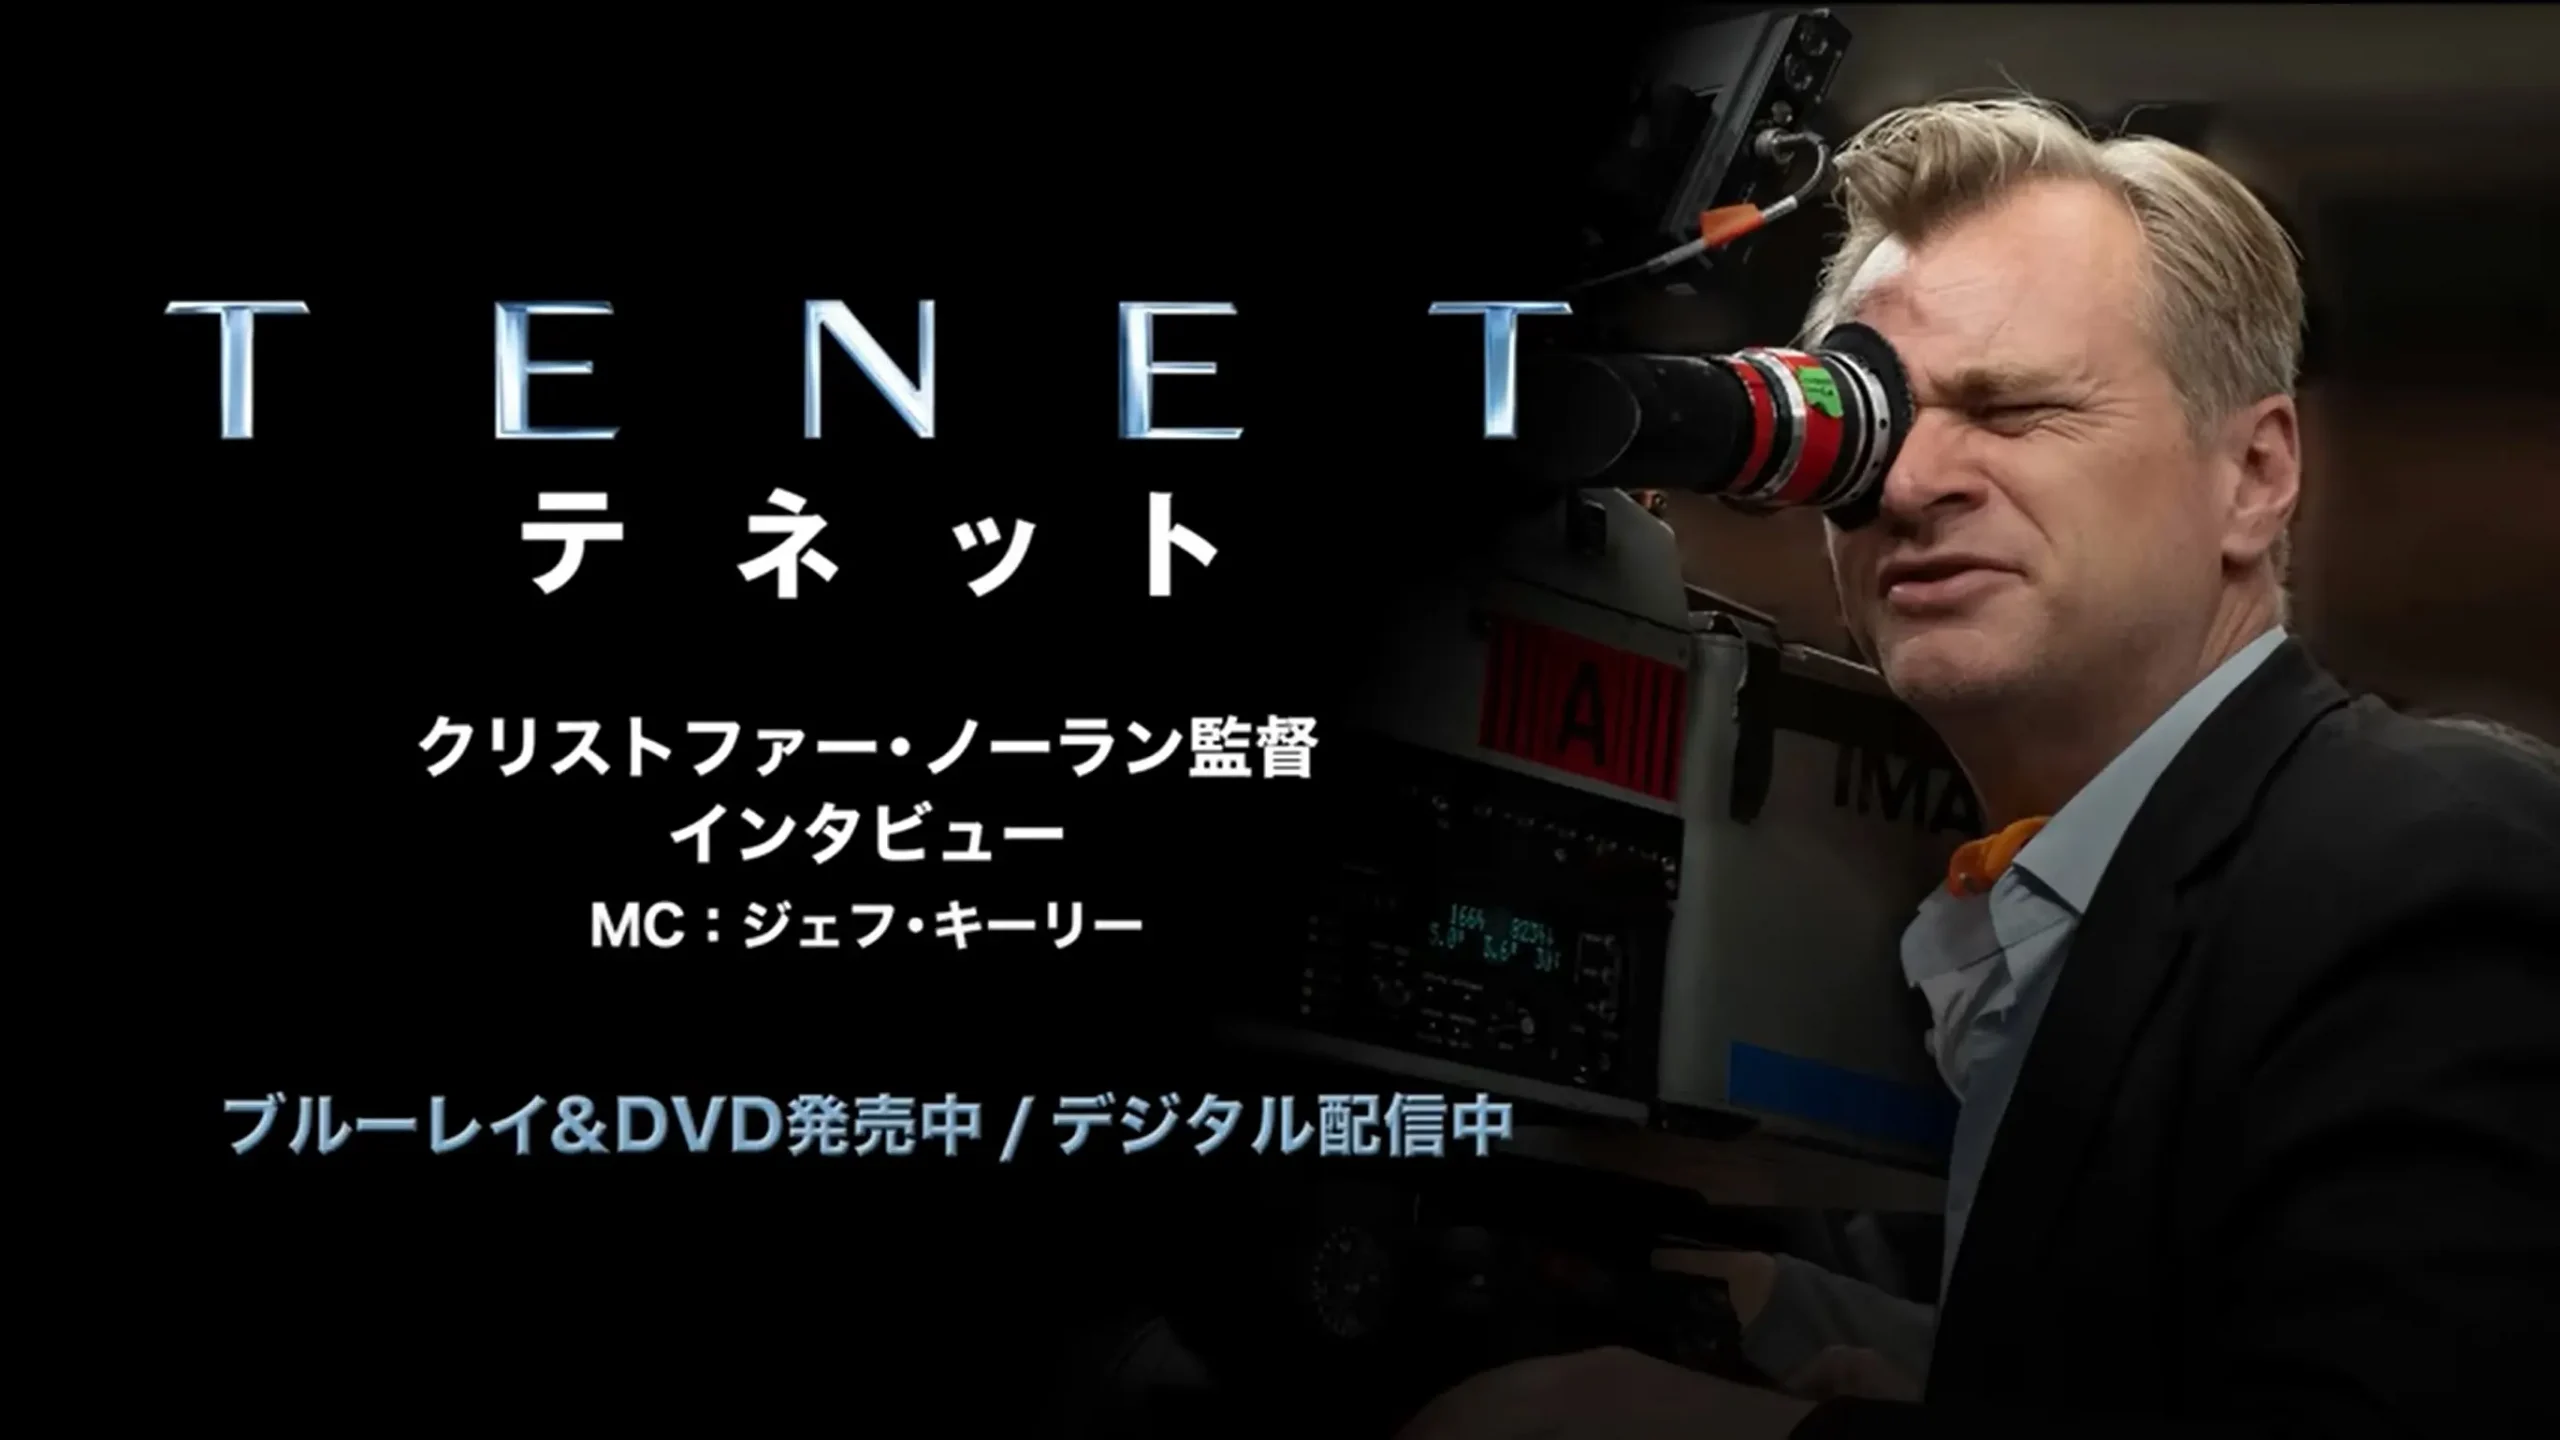 「TENET テネット」の吹き替えはBD、DVD、デジタルに収録